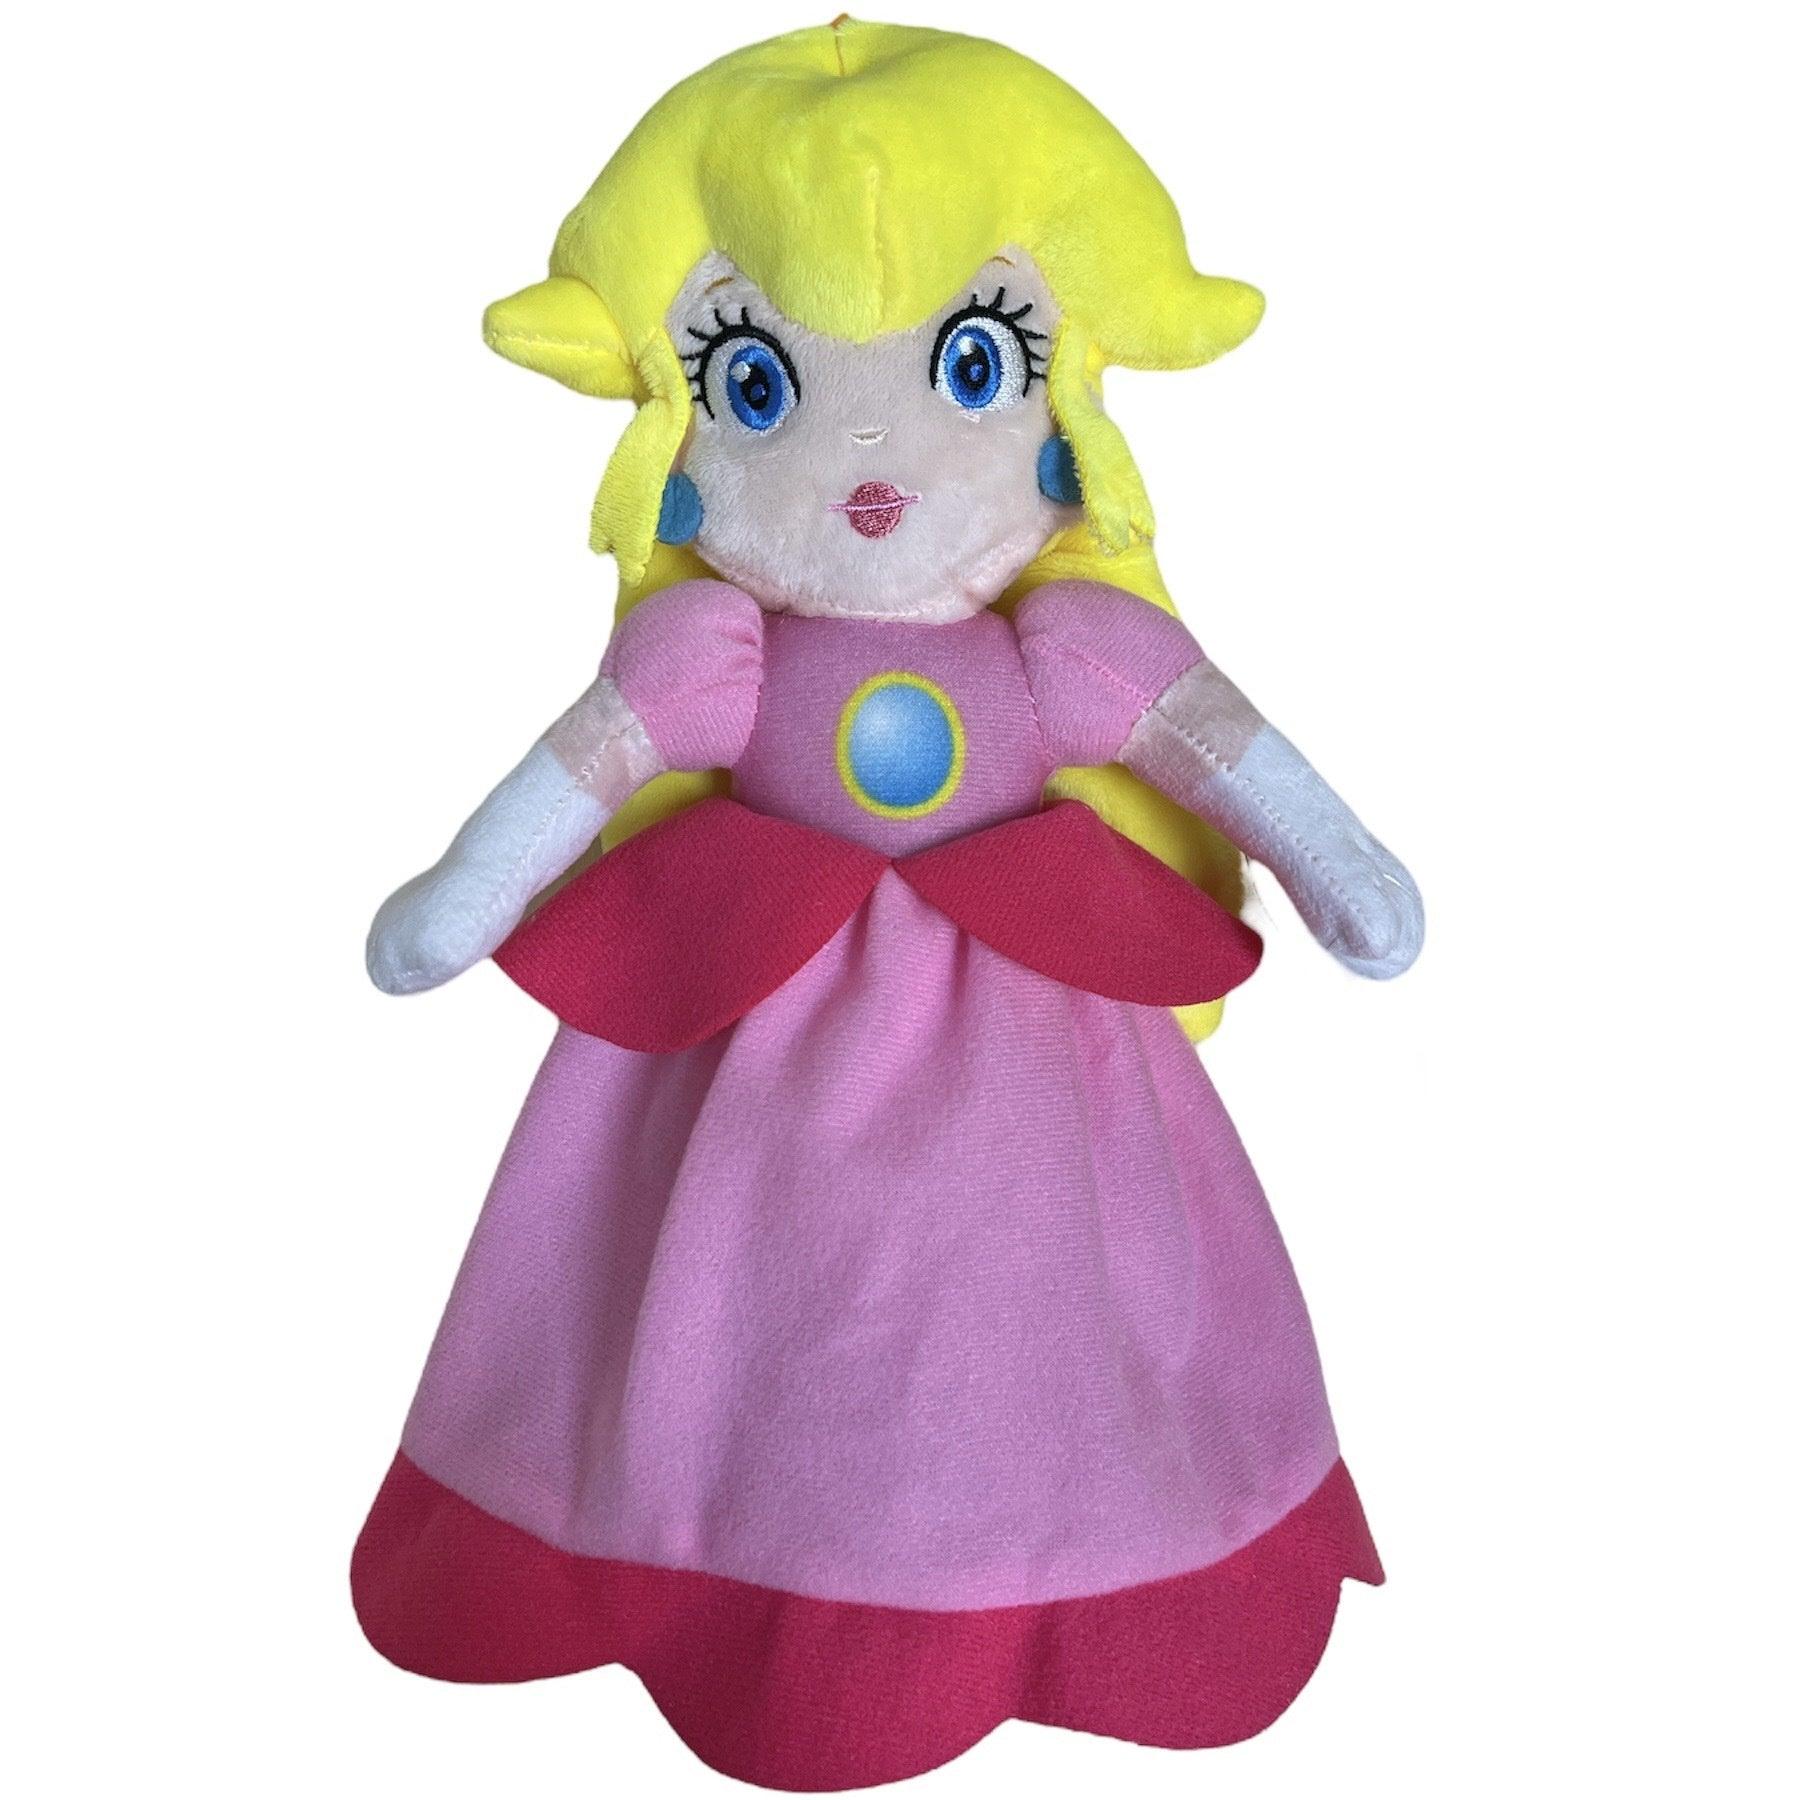 Nintendo Official Super Mario Full body Soft Plush, 12 Large - Princess  Peach 